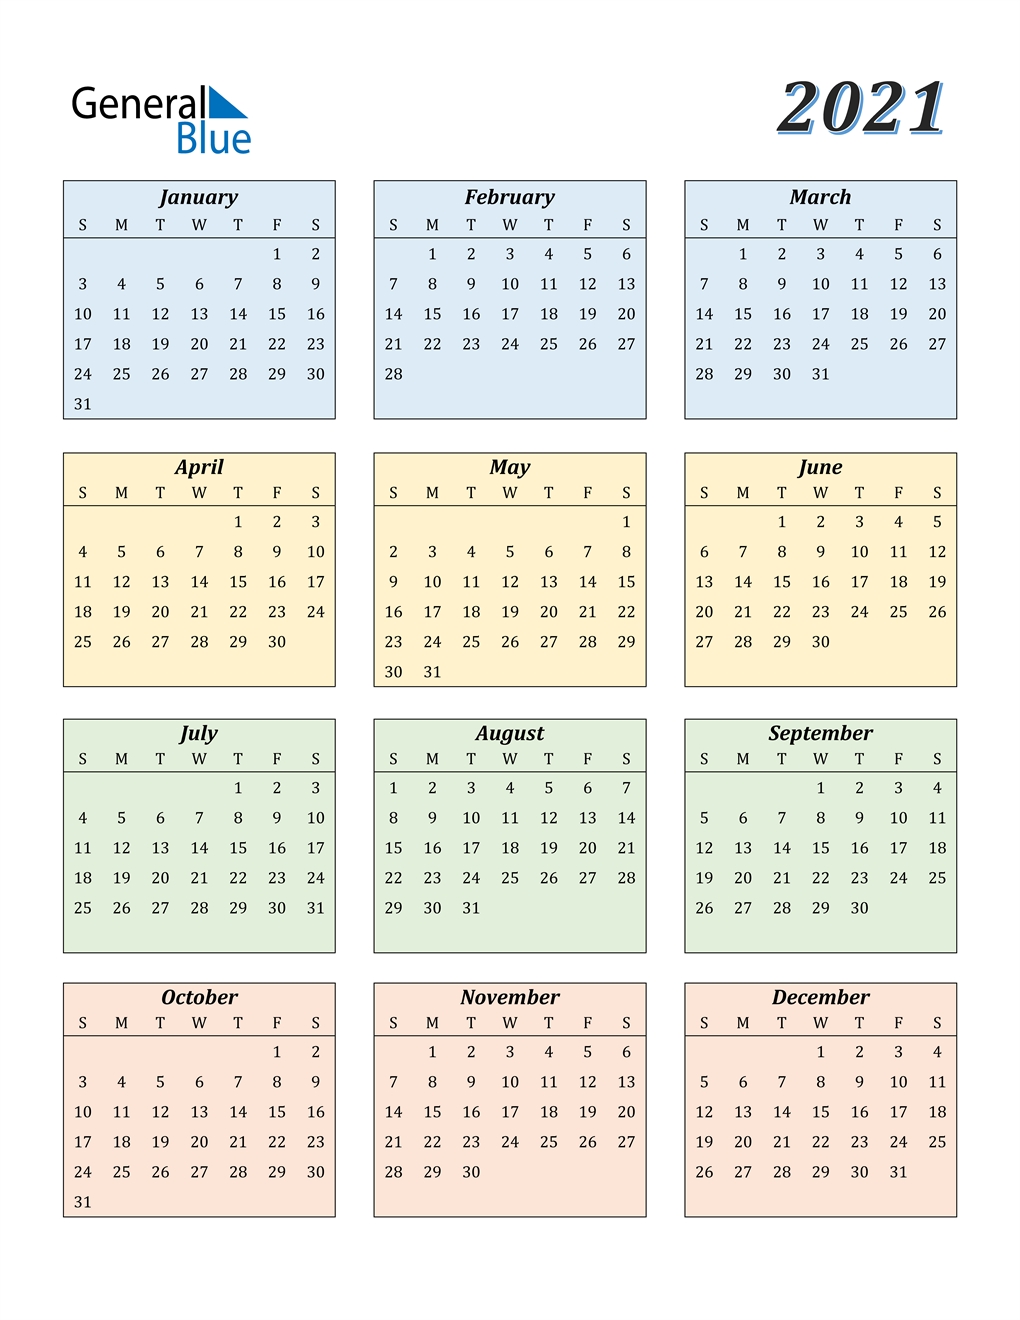 Take 2021 Caledar Year Week And Dates Excel